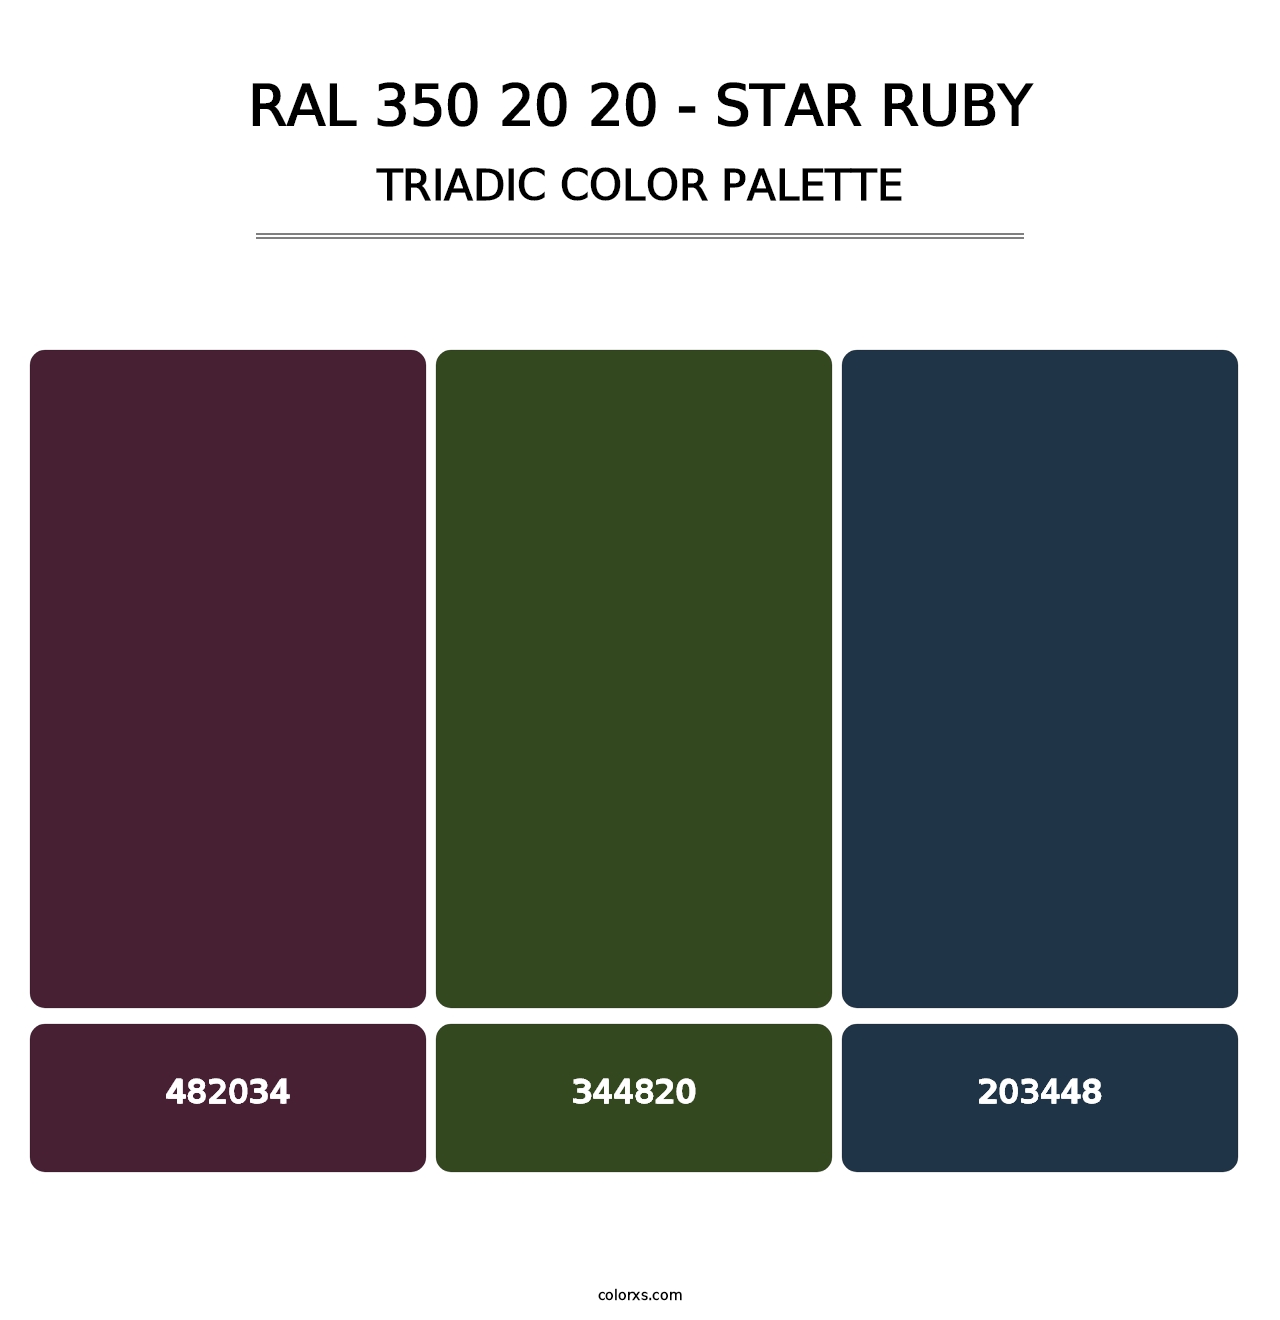 RAL 350 20 20 - Star Ruby - Triadic Color Palette